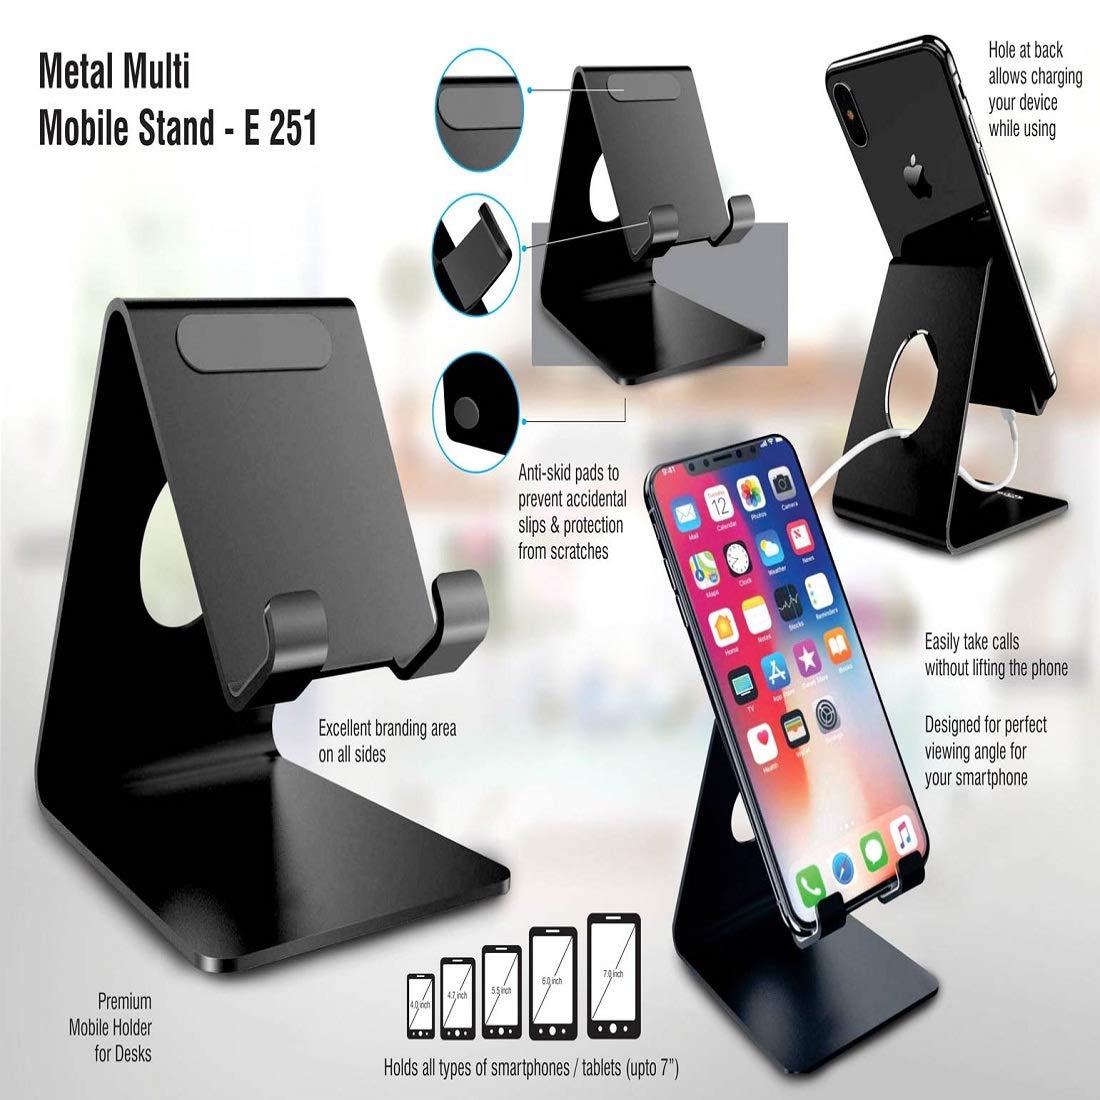 Metal Multi Mobile Stand